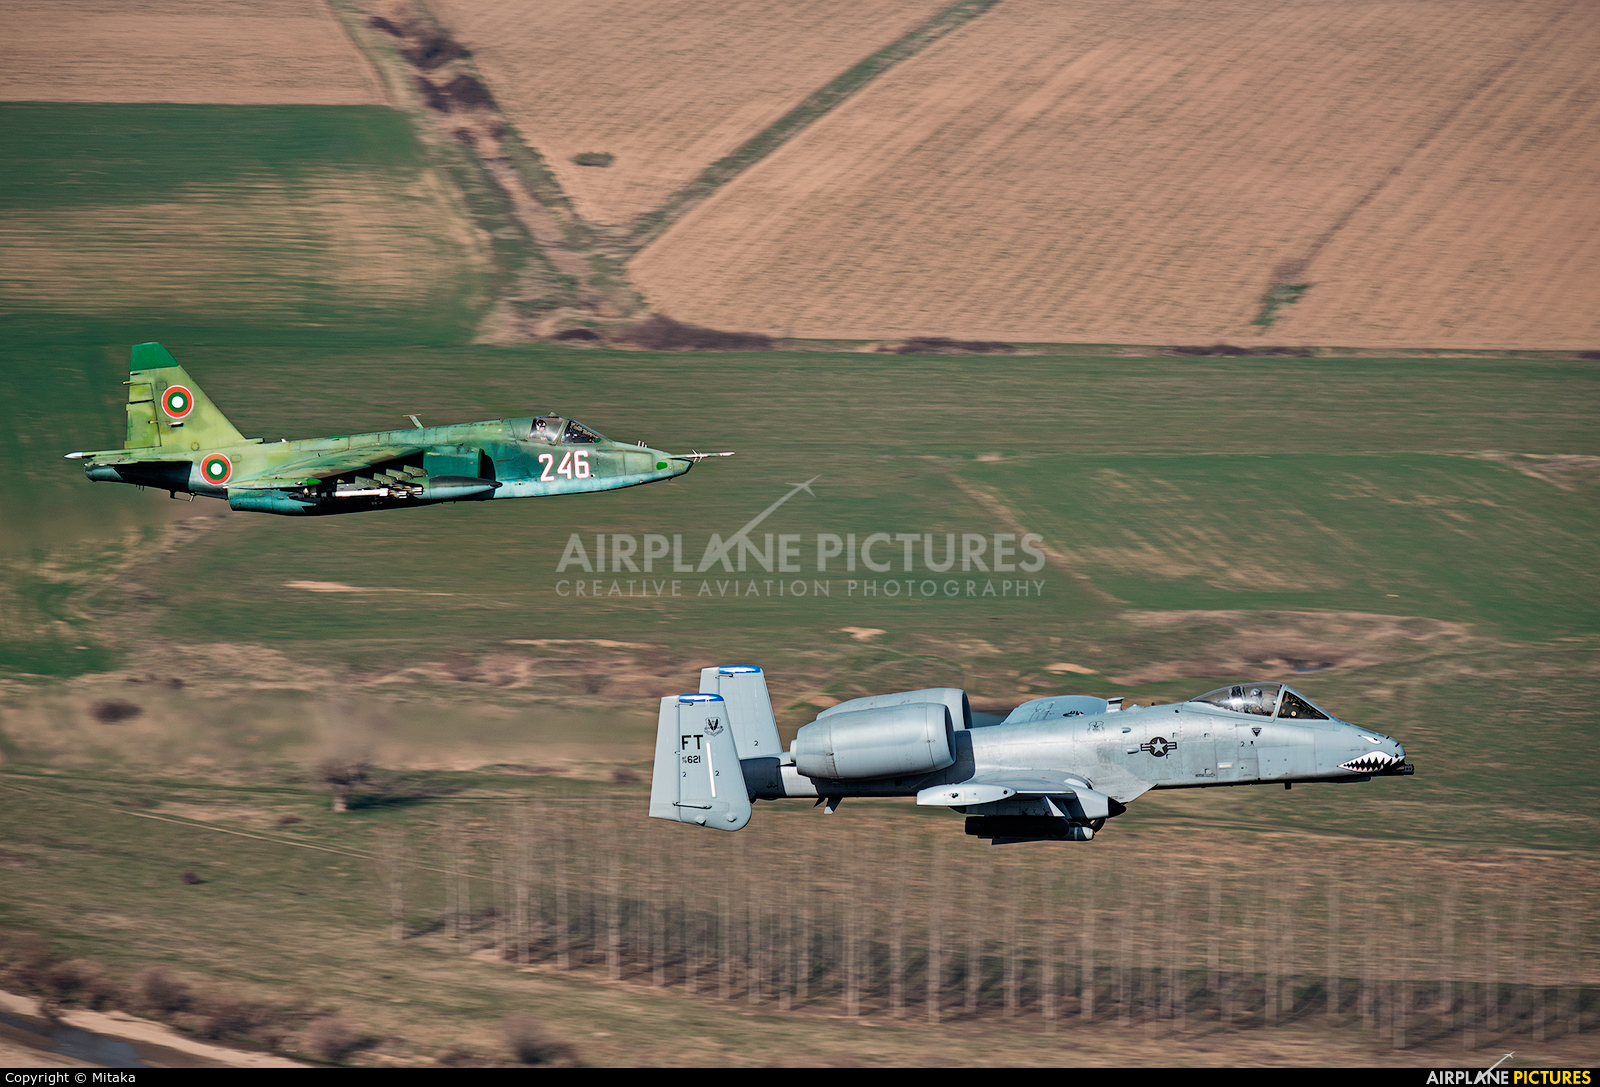 Bulgaria - Air Force 246 aircraft at In Flight - Bulgaria